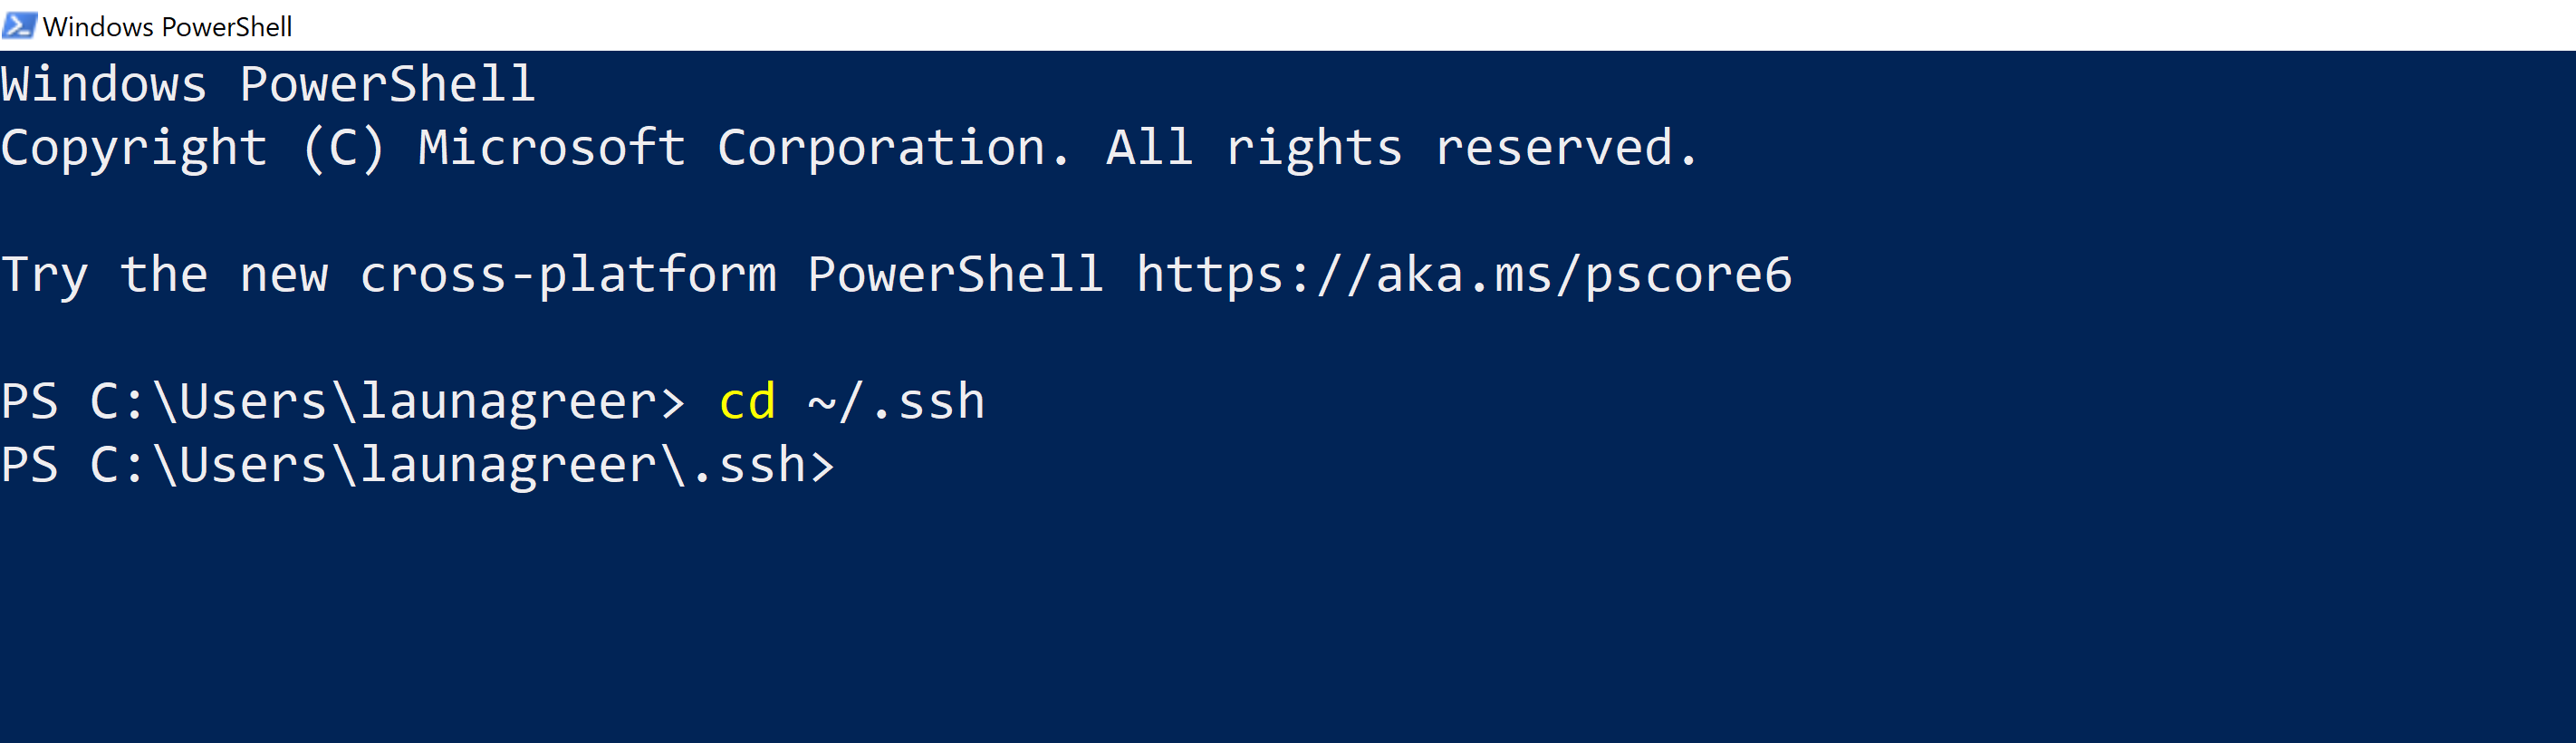 SSH directory screenshot - Windows